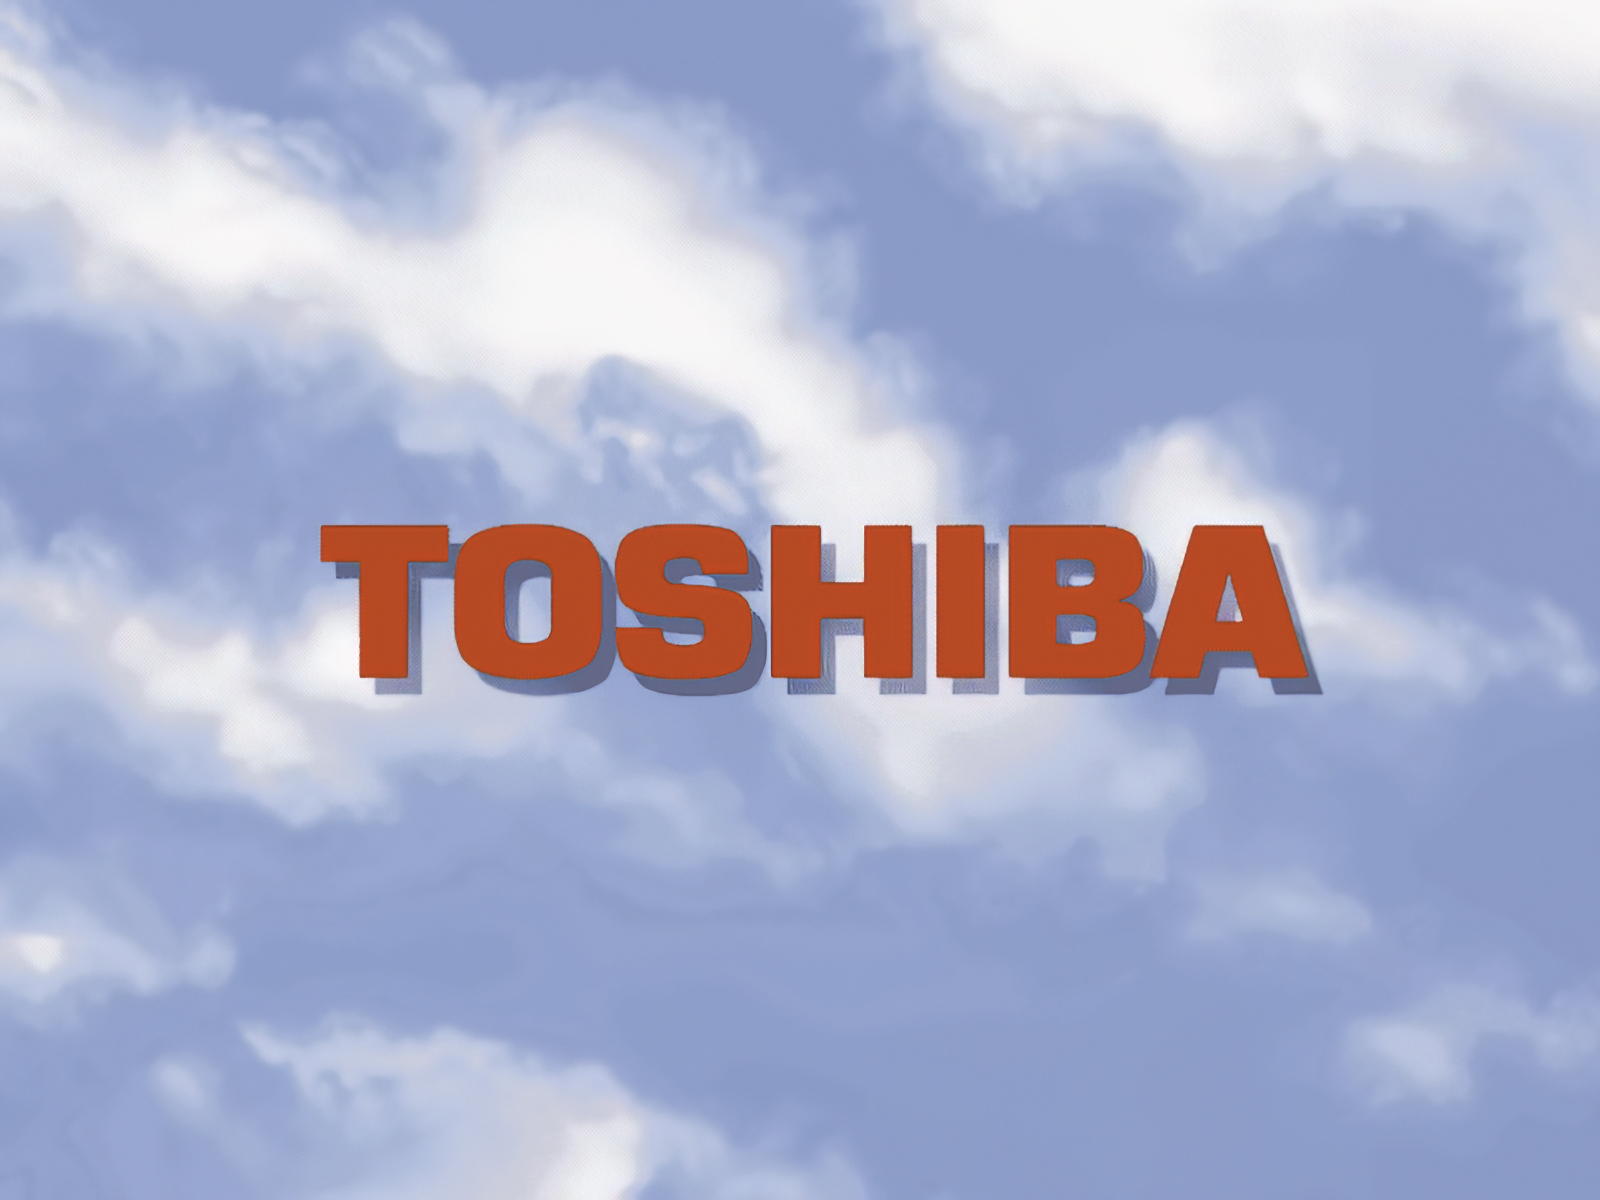 Toshiba Laptop Wallpaper Pack